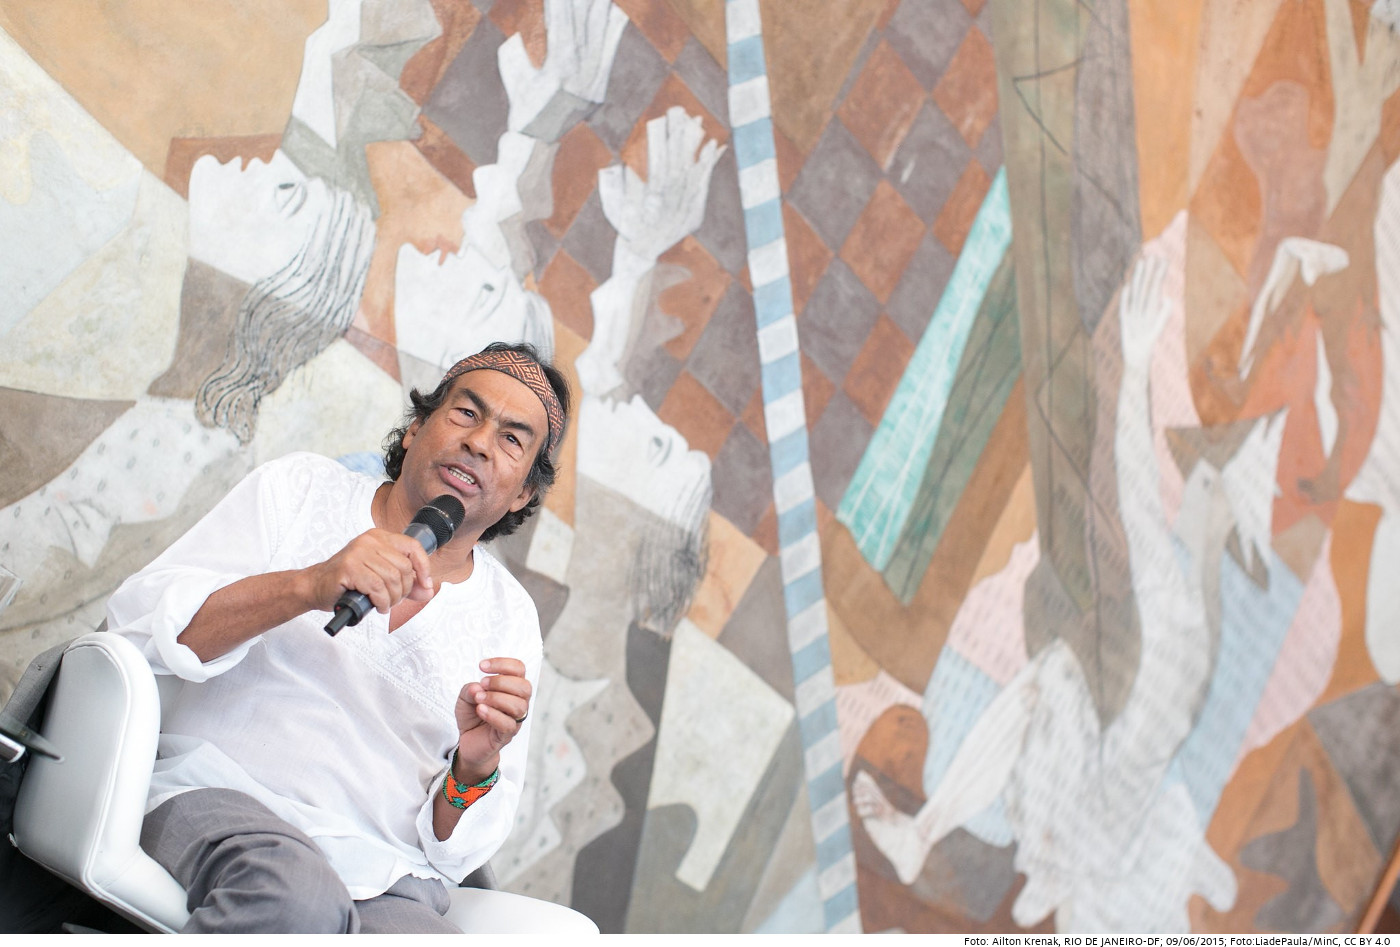 Ailton Krenak, Aktivist für die Rechte Indigener, im Juni 2015 bei einer Konferenz in Rio de Janeiro, Brasilien. Foto: Ailton Krenak, Lançamento da Política Nacional das Artes; LiadePaula/MinC, CC BY 4.0